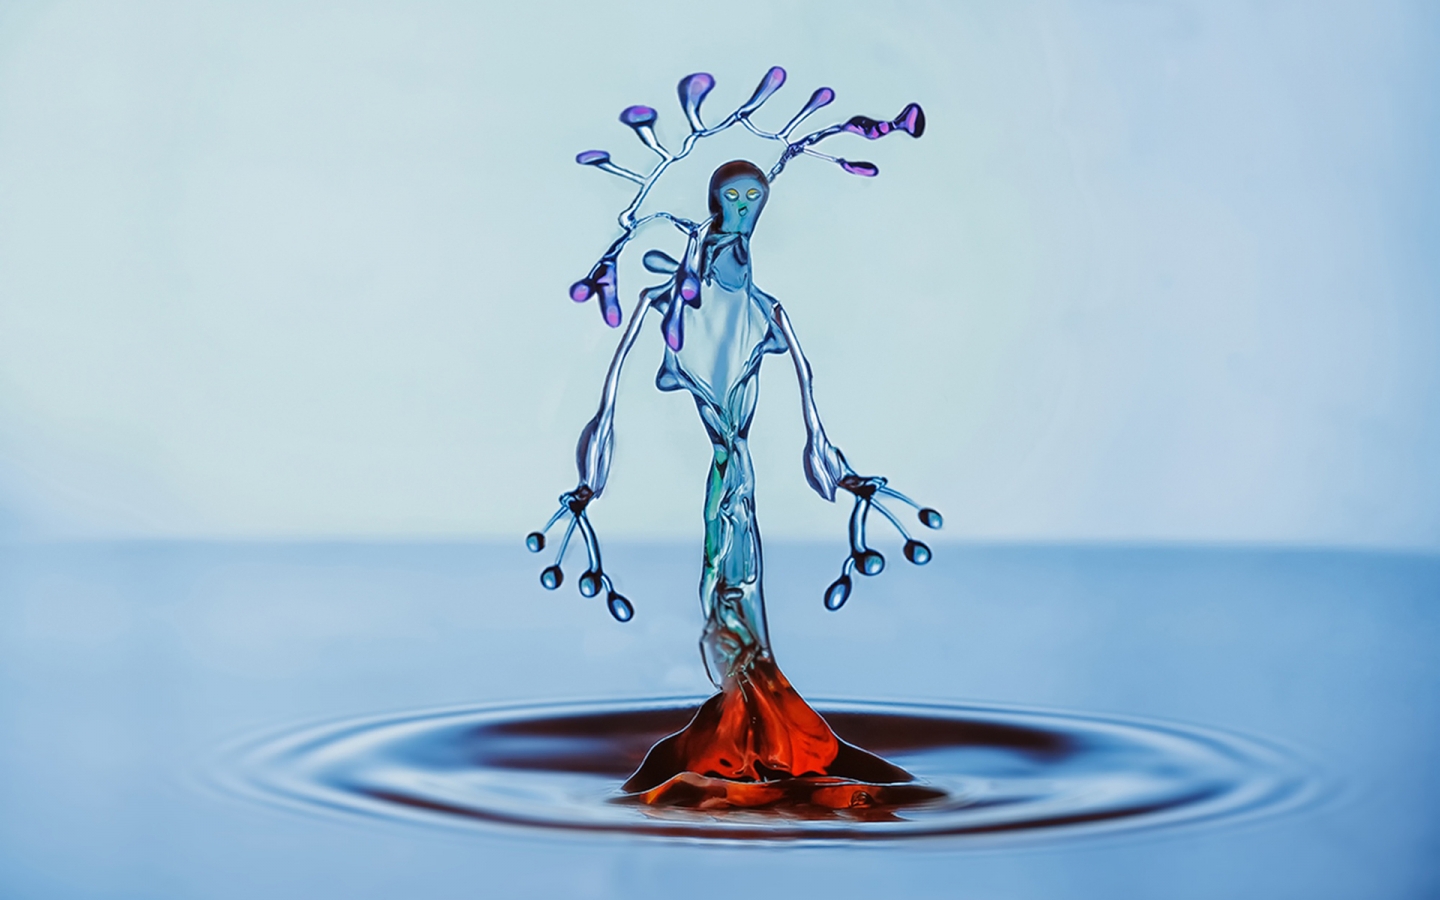 Water Splash Figurine for 1440 x 900 widescreen resolution